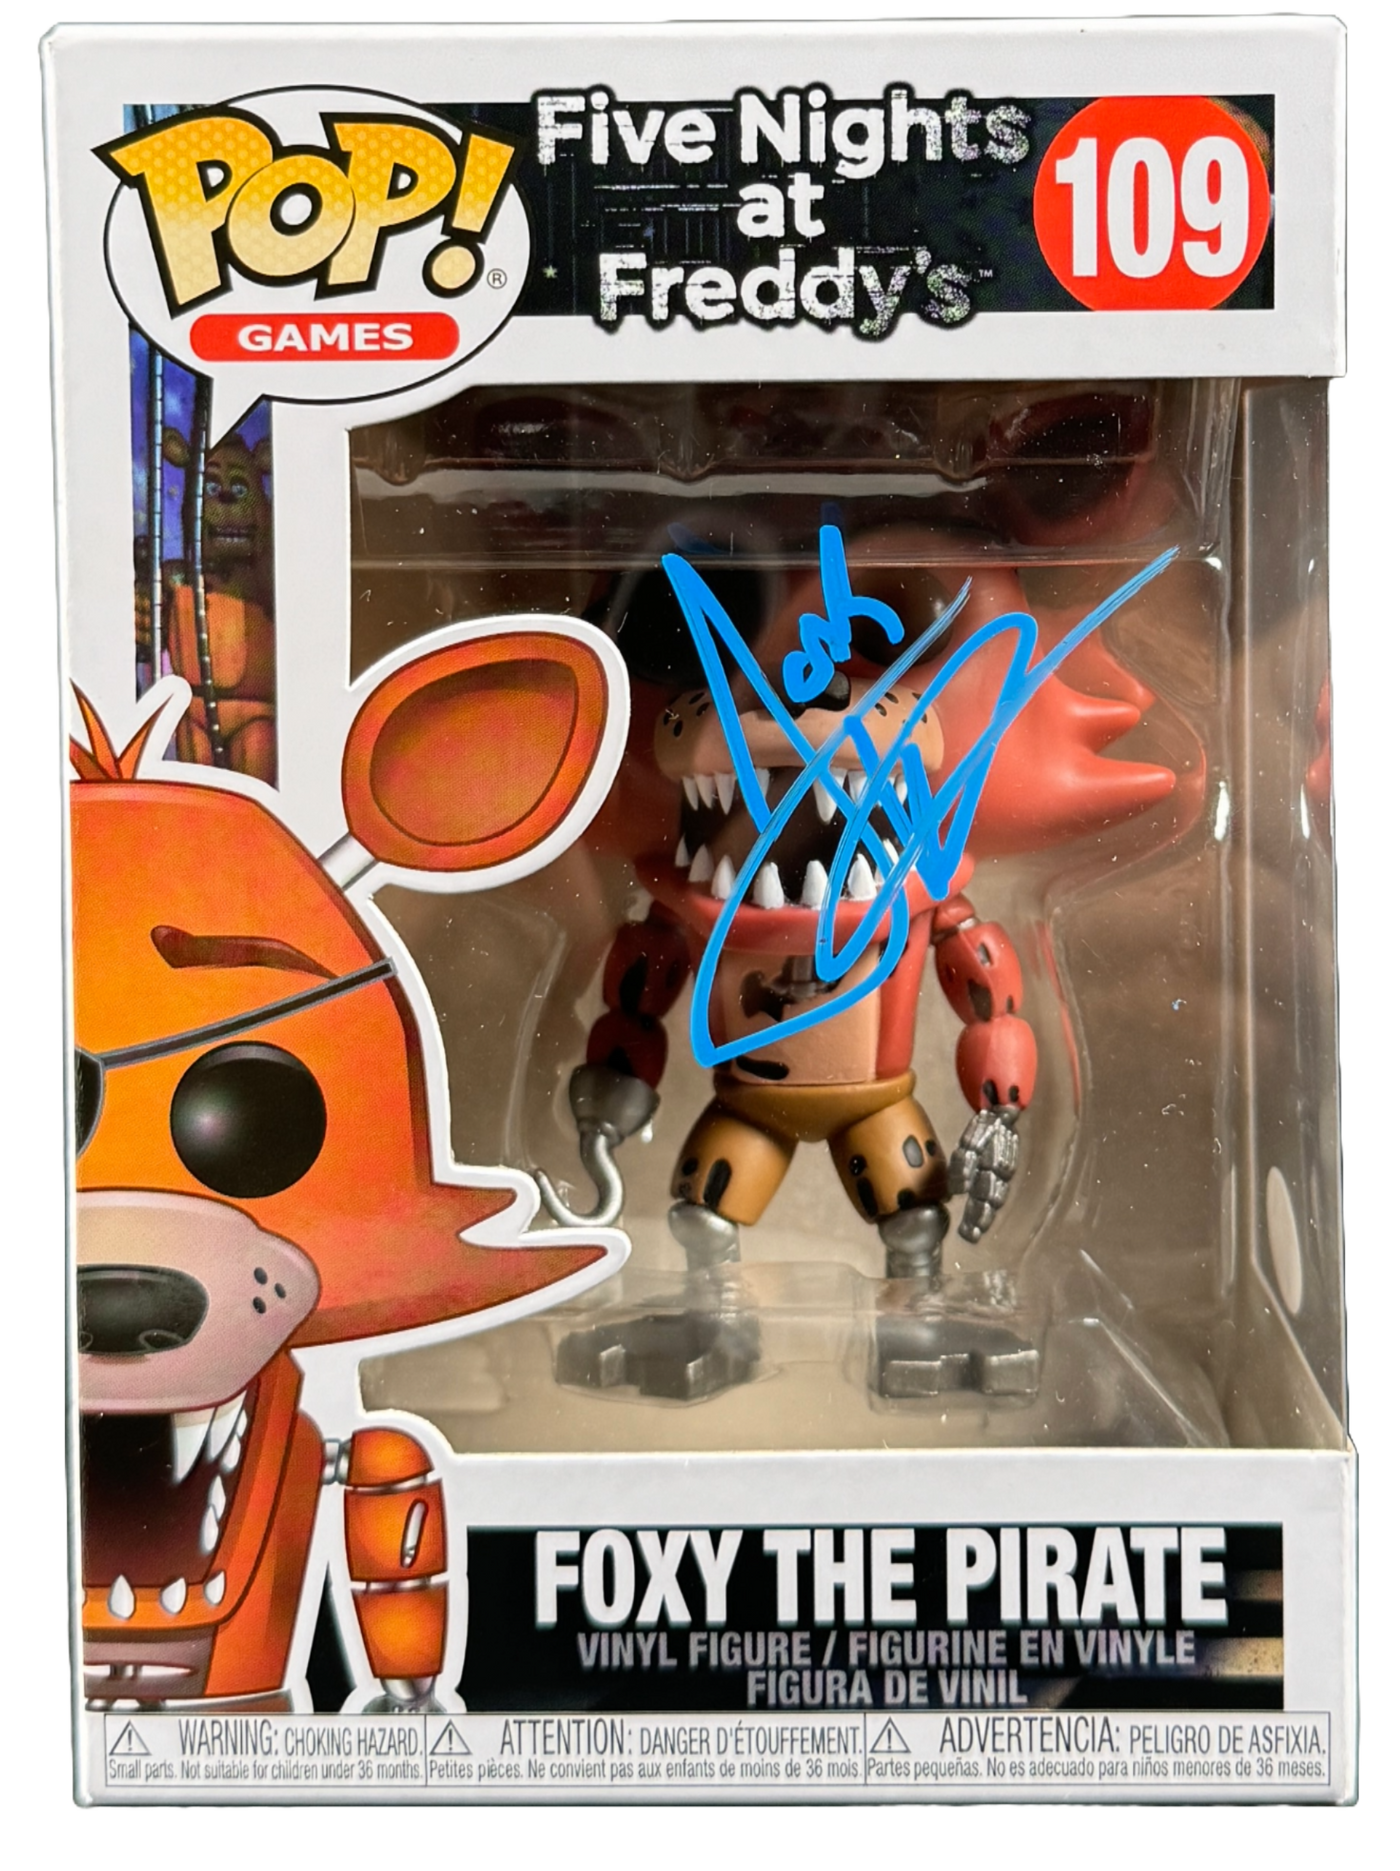 Josh Hutcherson "Foxy the Pirate" Signed Funko Pop #109 Five Nights at Freddy's Autographed JSA COA